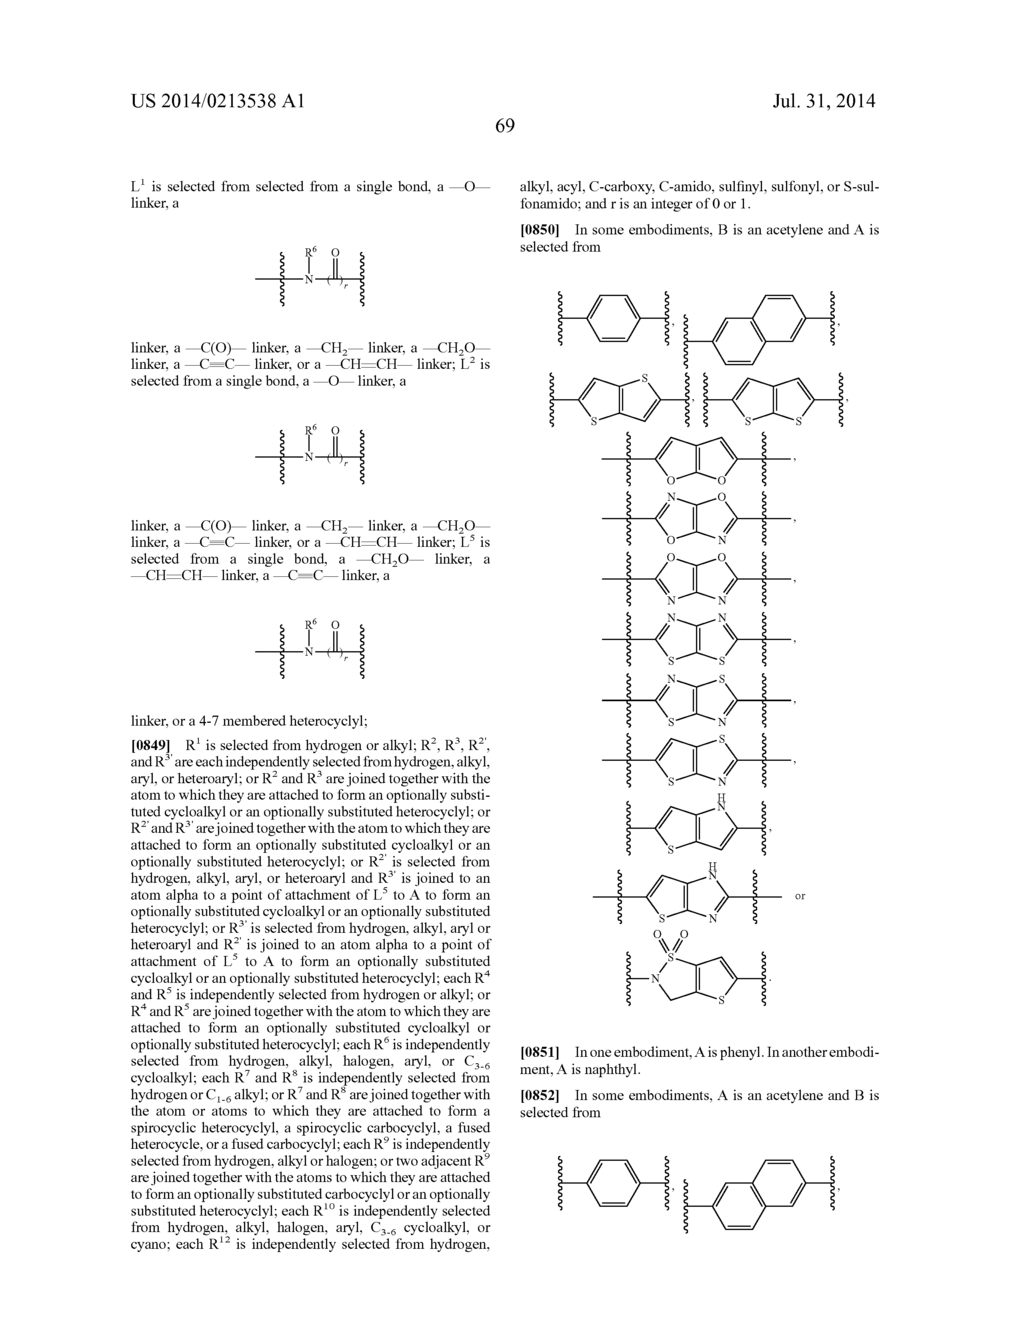 LYSOPHOSPHATIDIC ACID RECEPTOR ANTAGONISTS - diagram, schematic, and image 70